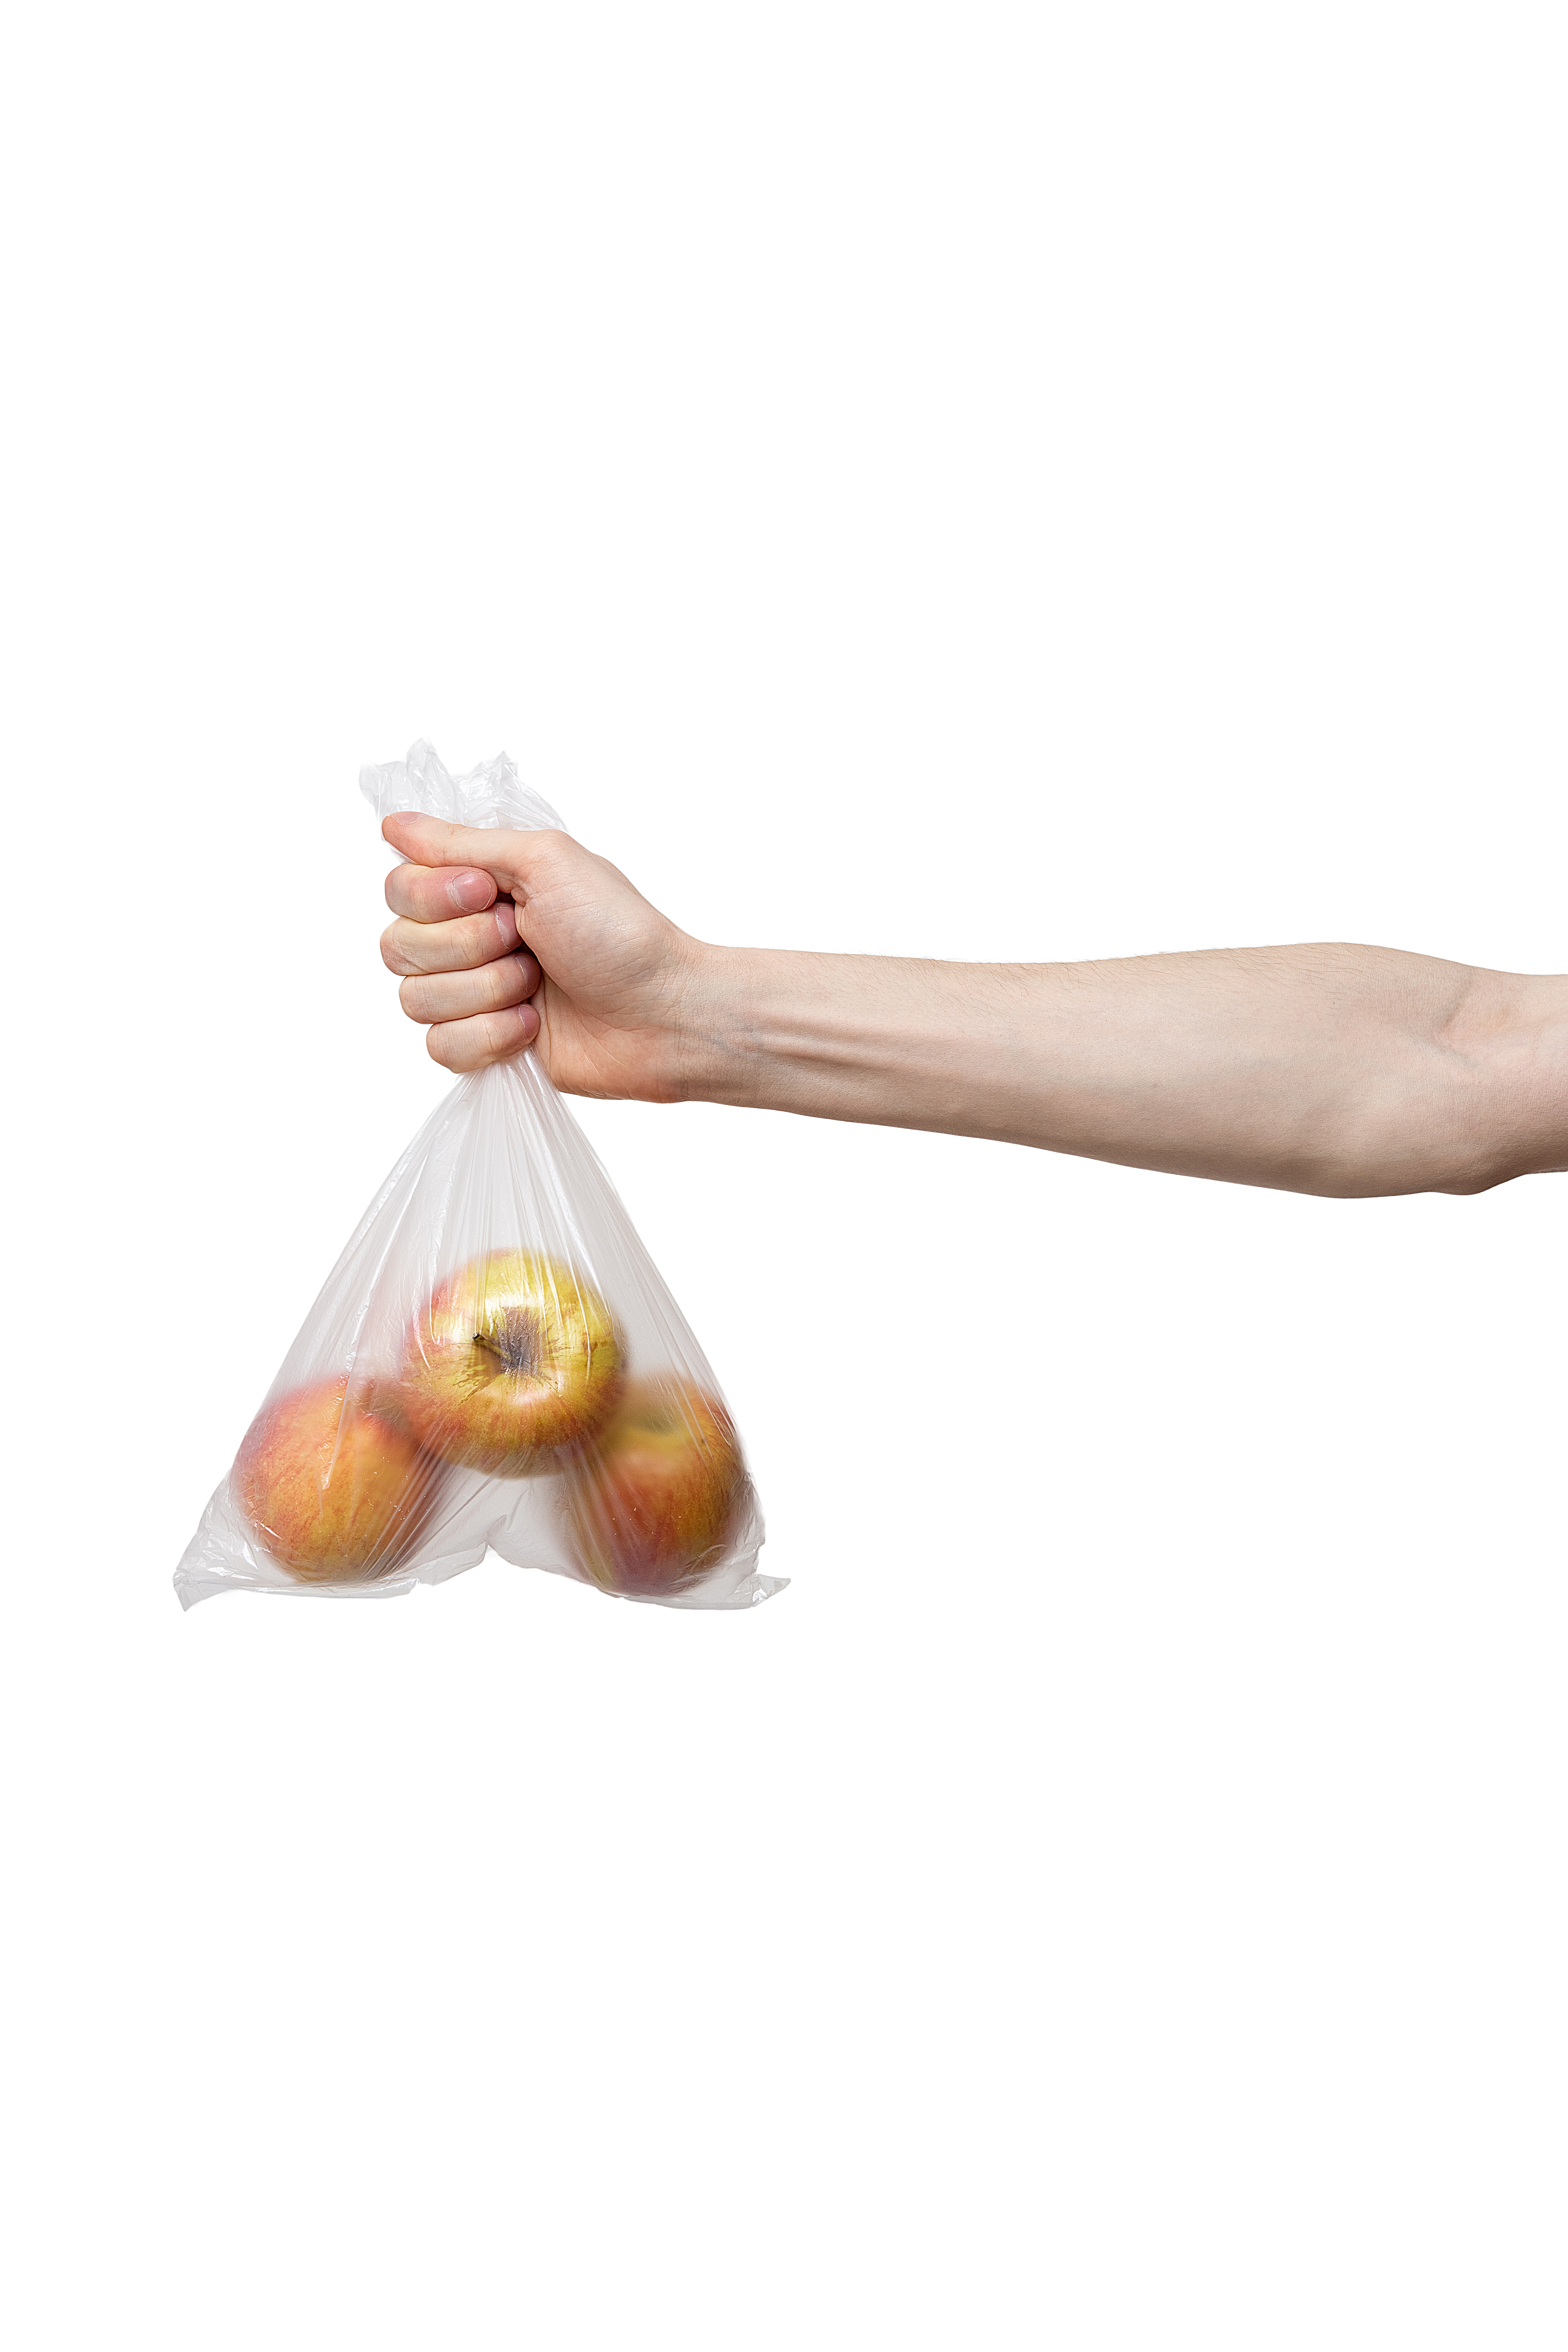 polythene-bag-held-hand-isolated-white-man-holding-packet-fresh-apples